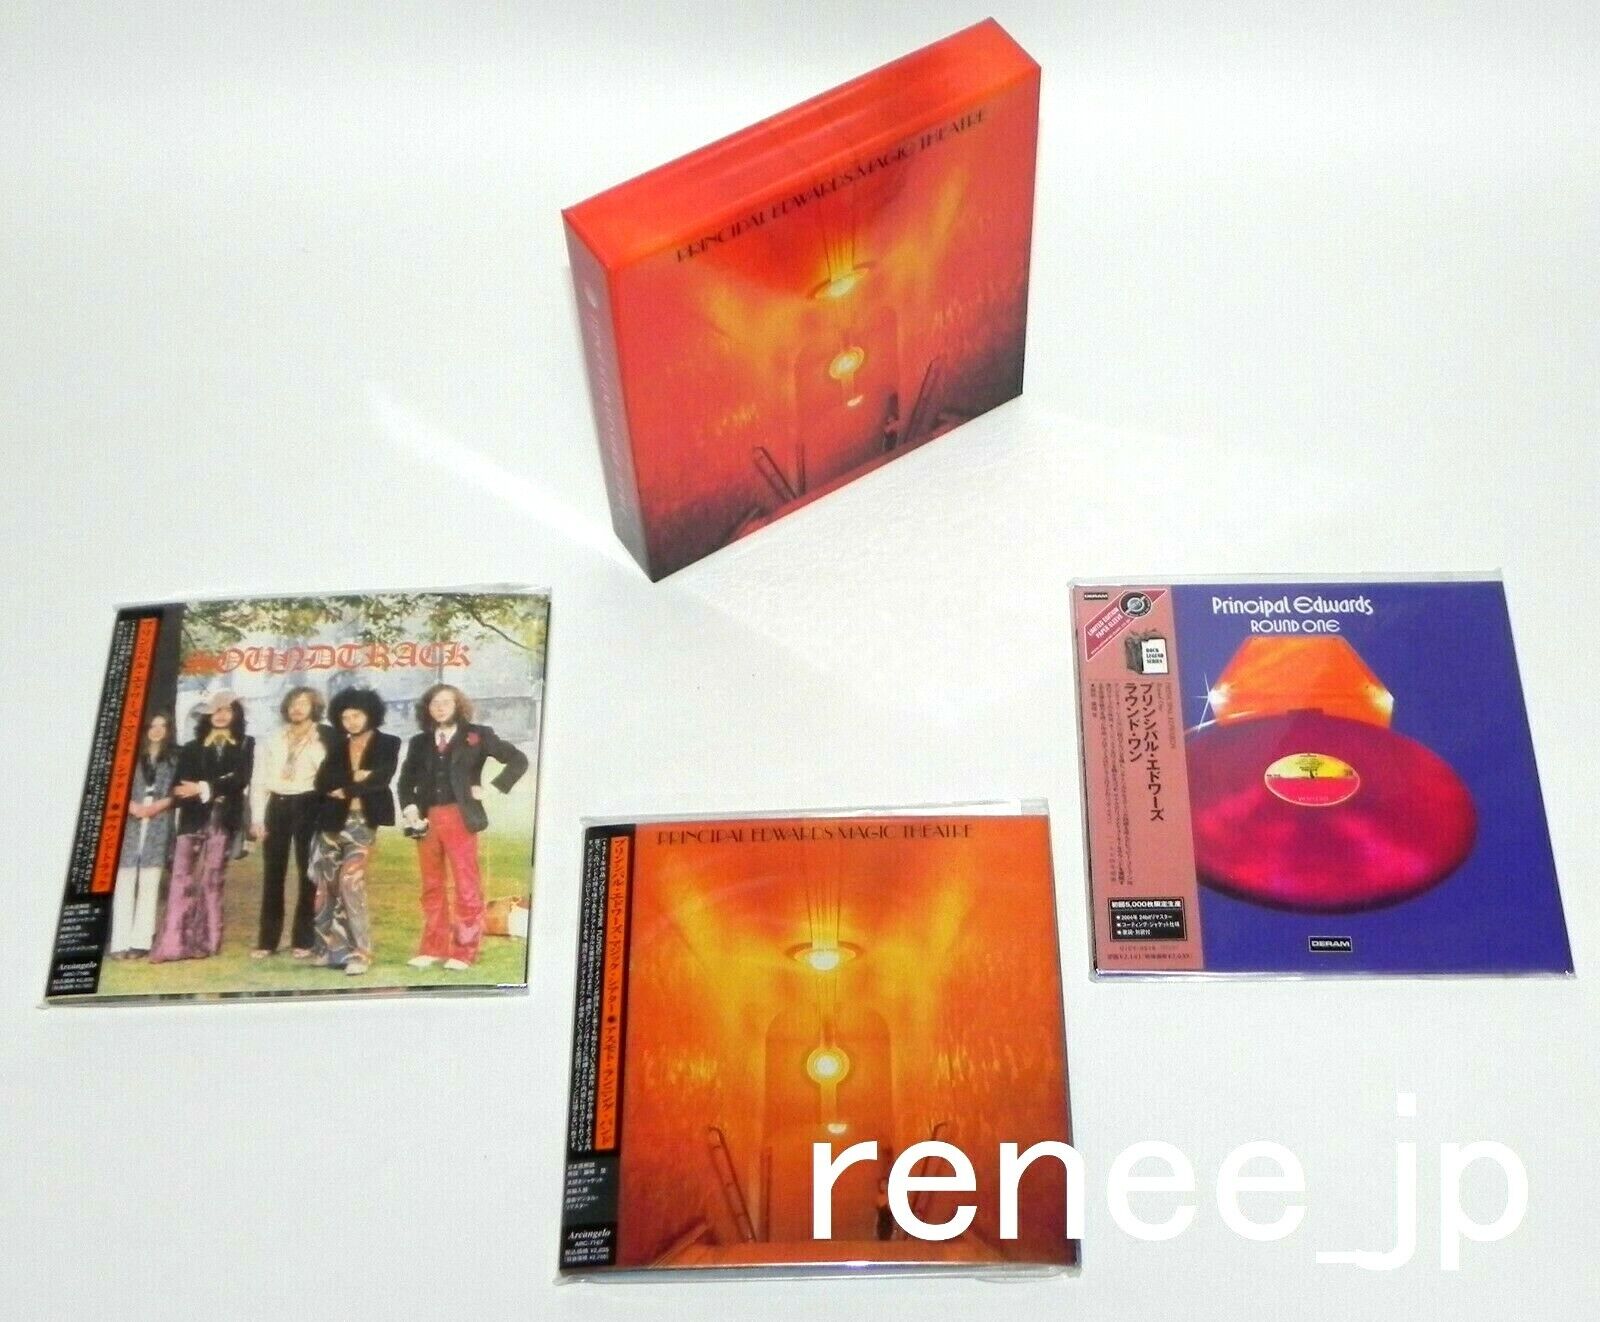 Principal Edwards Magic Theatre / JAPAN Mini LP CD x 3 titles + PROMO BOX Set